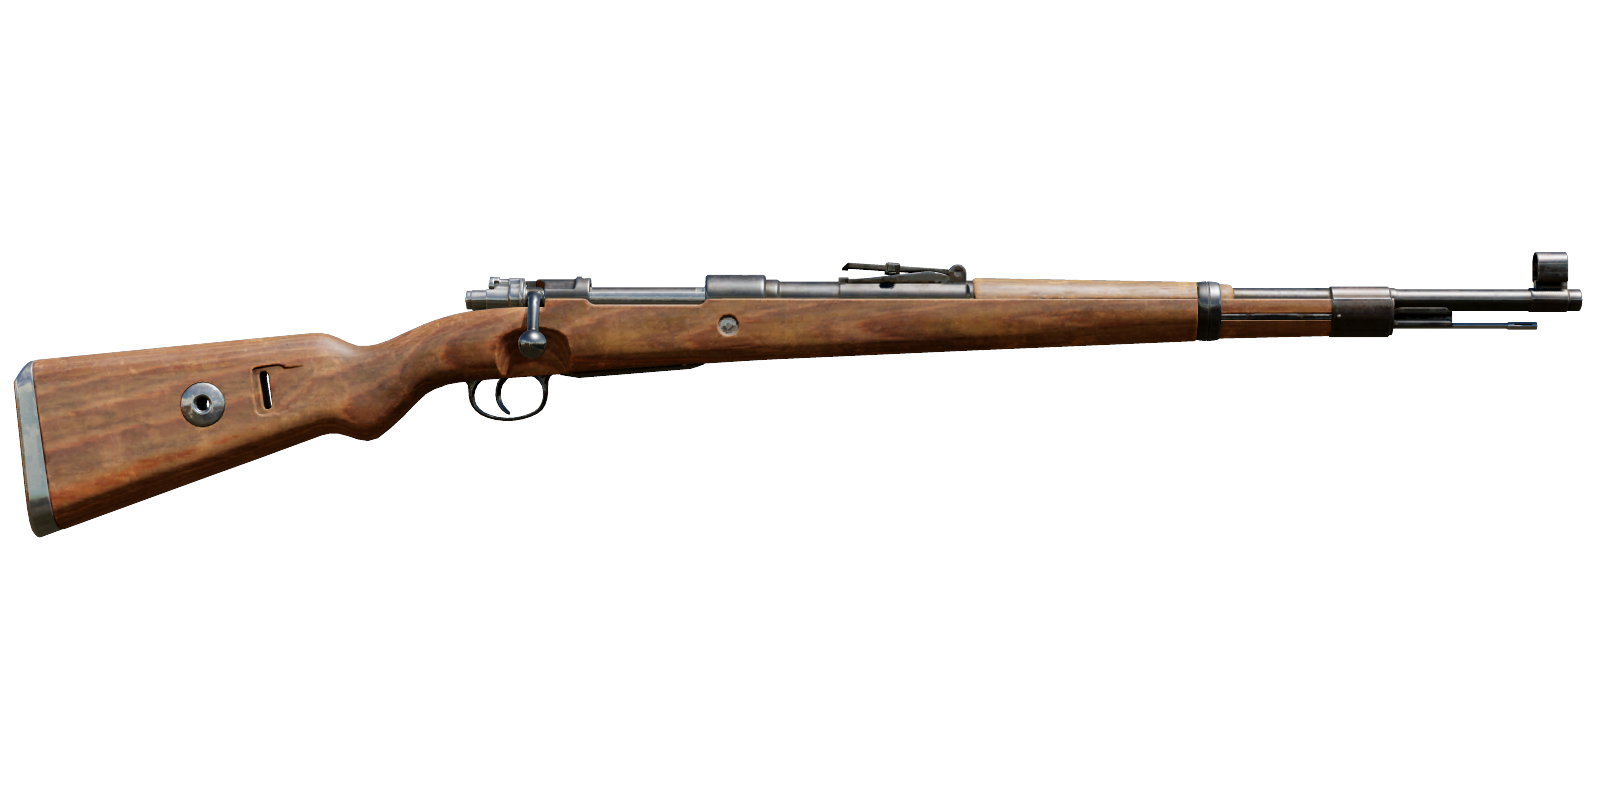 Stl kar98k wartime production gun.png